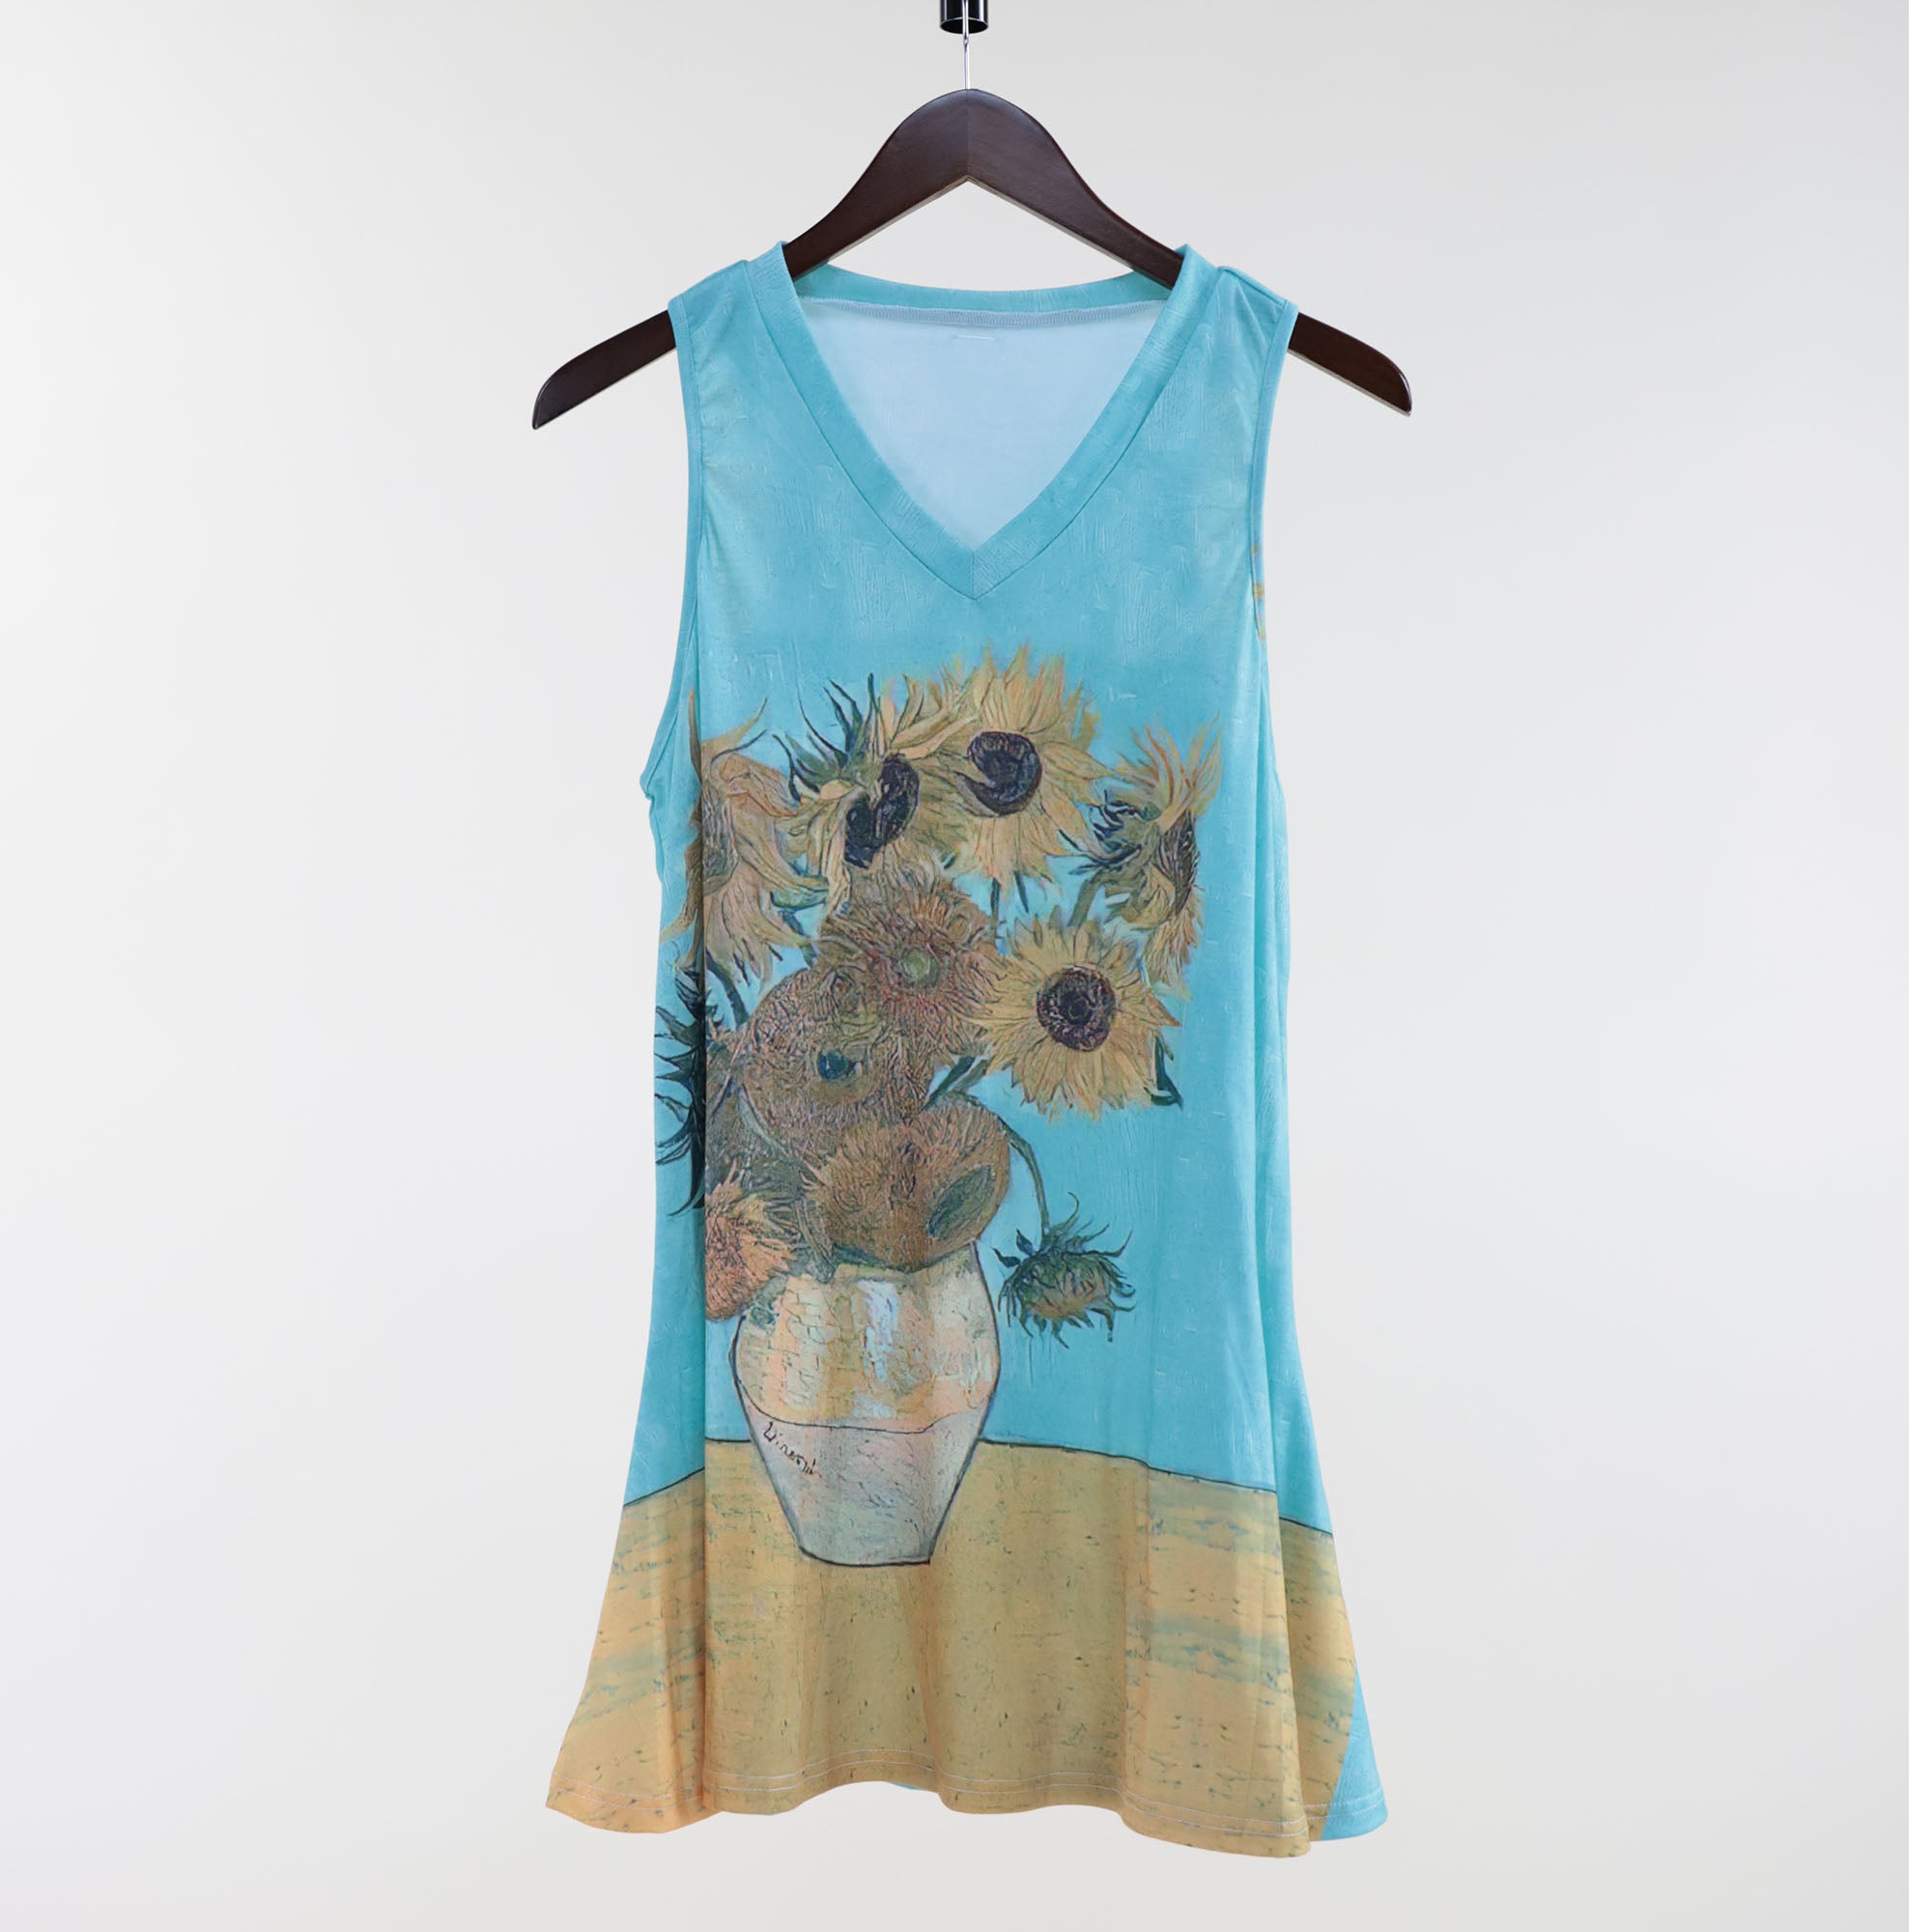 Museum Collection Van Gogh Sleeveless Tunic Dress - Sunflowers - S/M